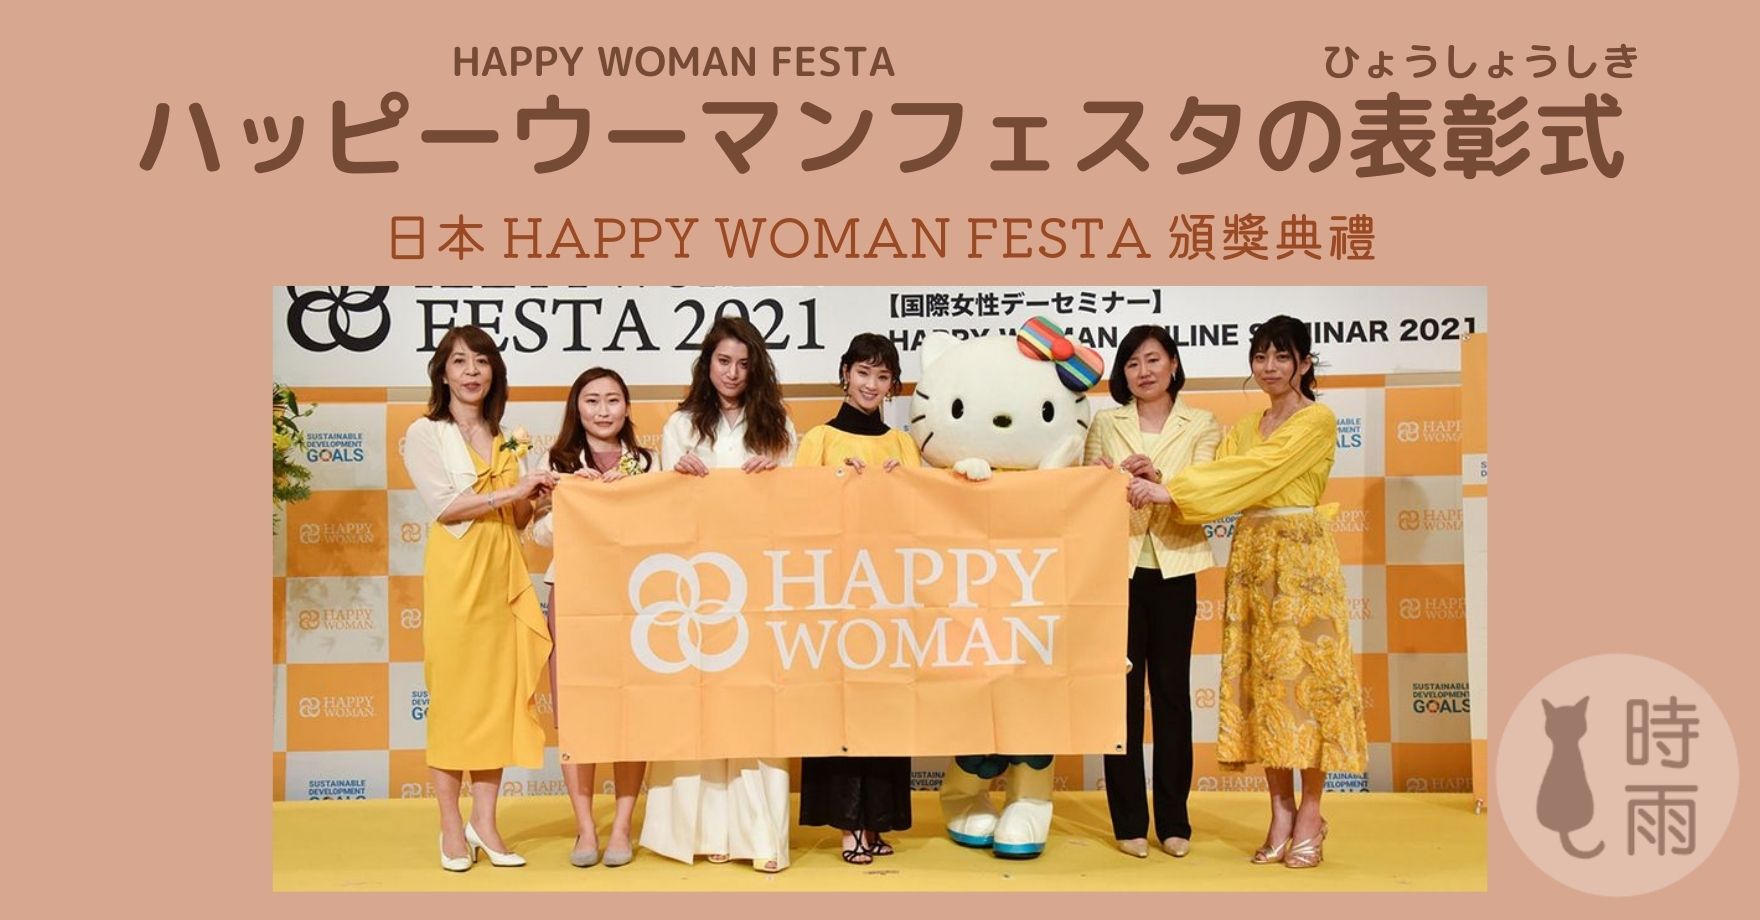 HAPPY WOMAN FESTA